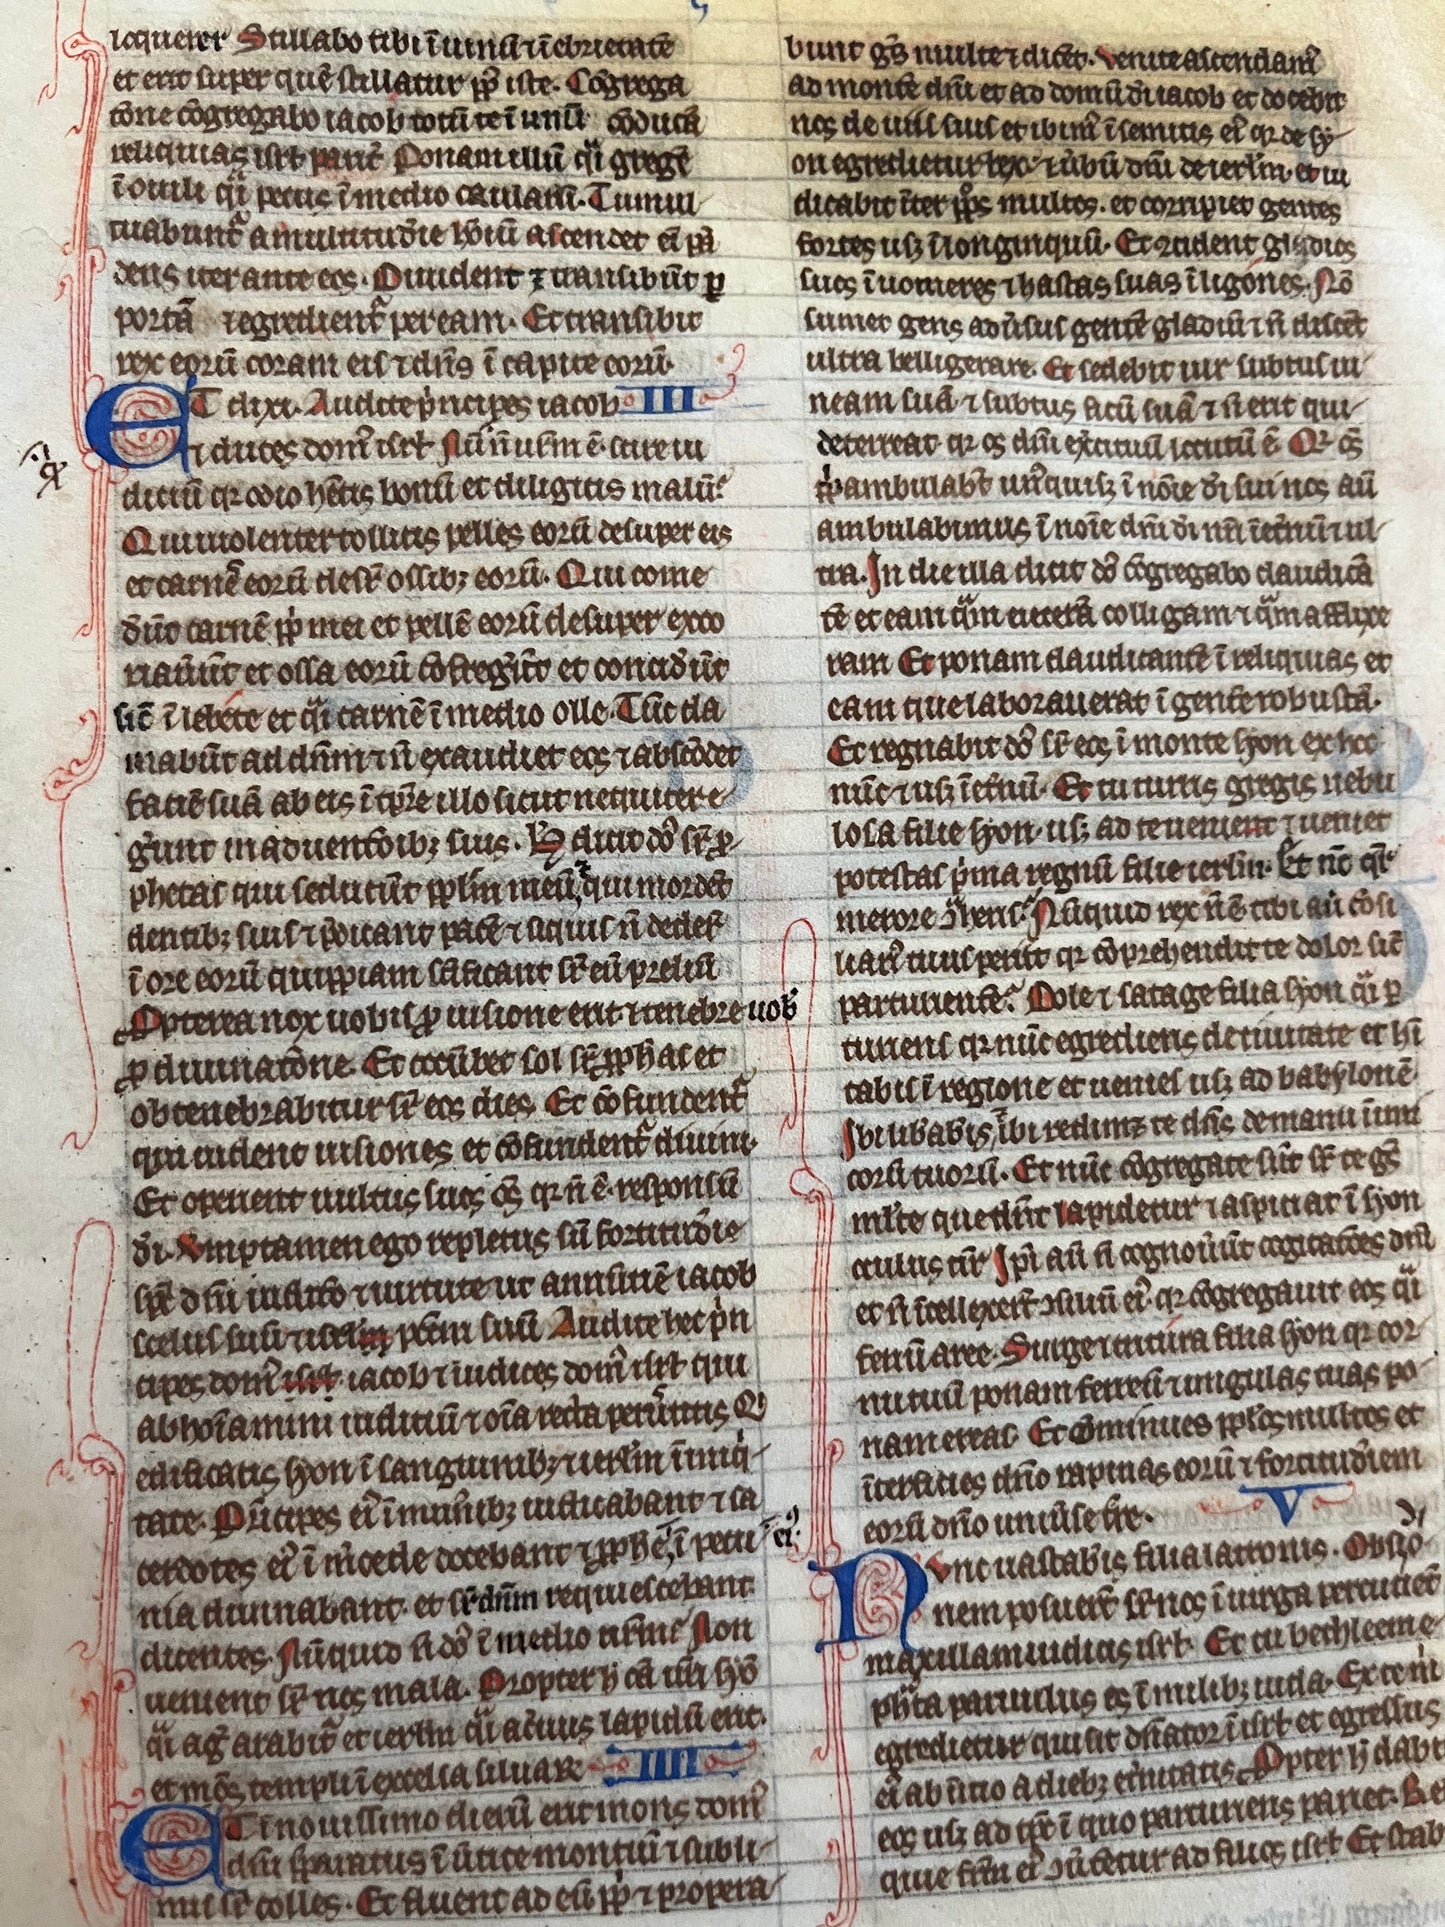 13th Century Mediaeval Vulgate Bible leaf - Micah